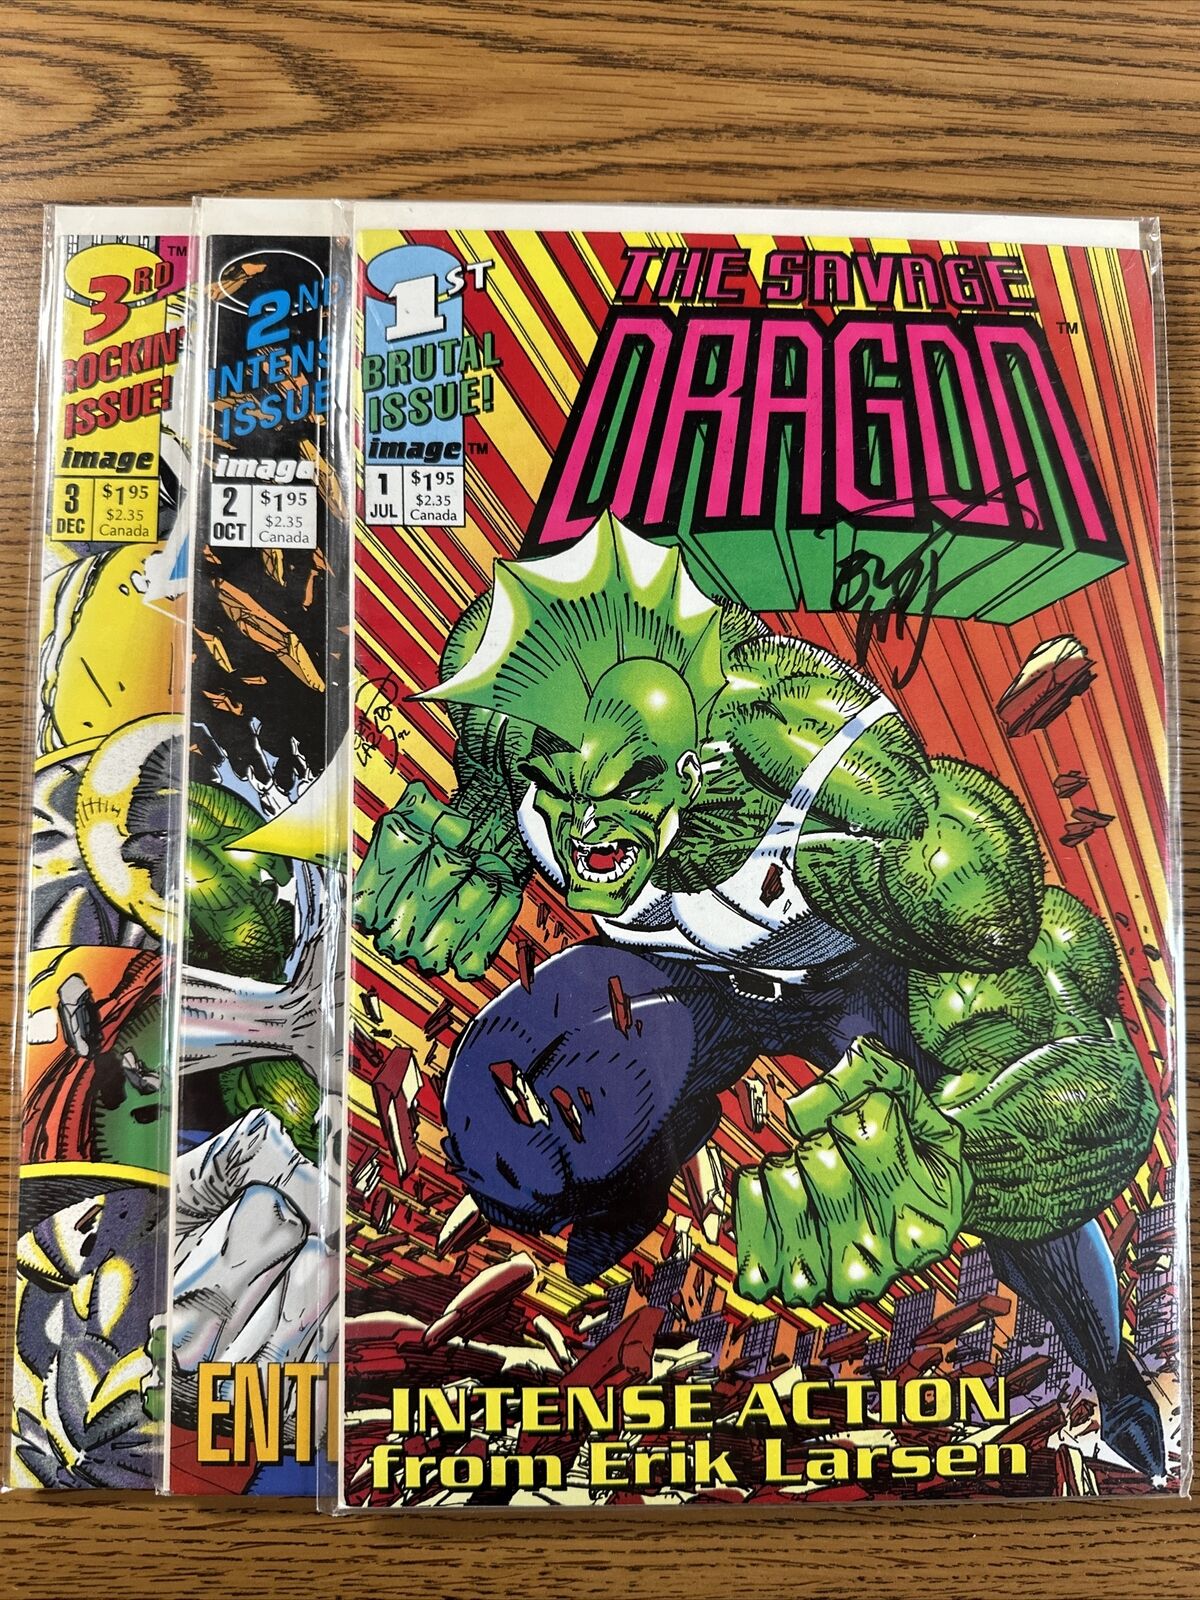 The Savage Dragon #1 2 3 Lot Run Image 1st Print #1 Signed By Larson VF/NM